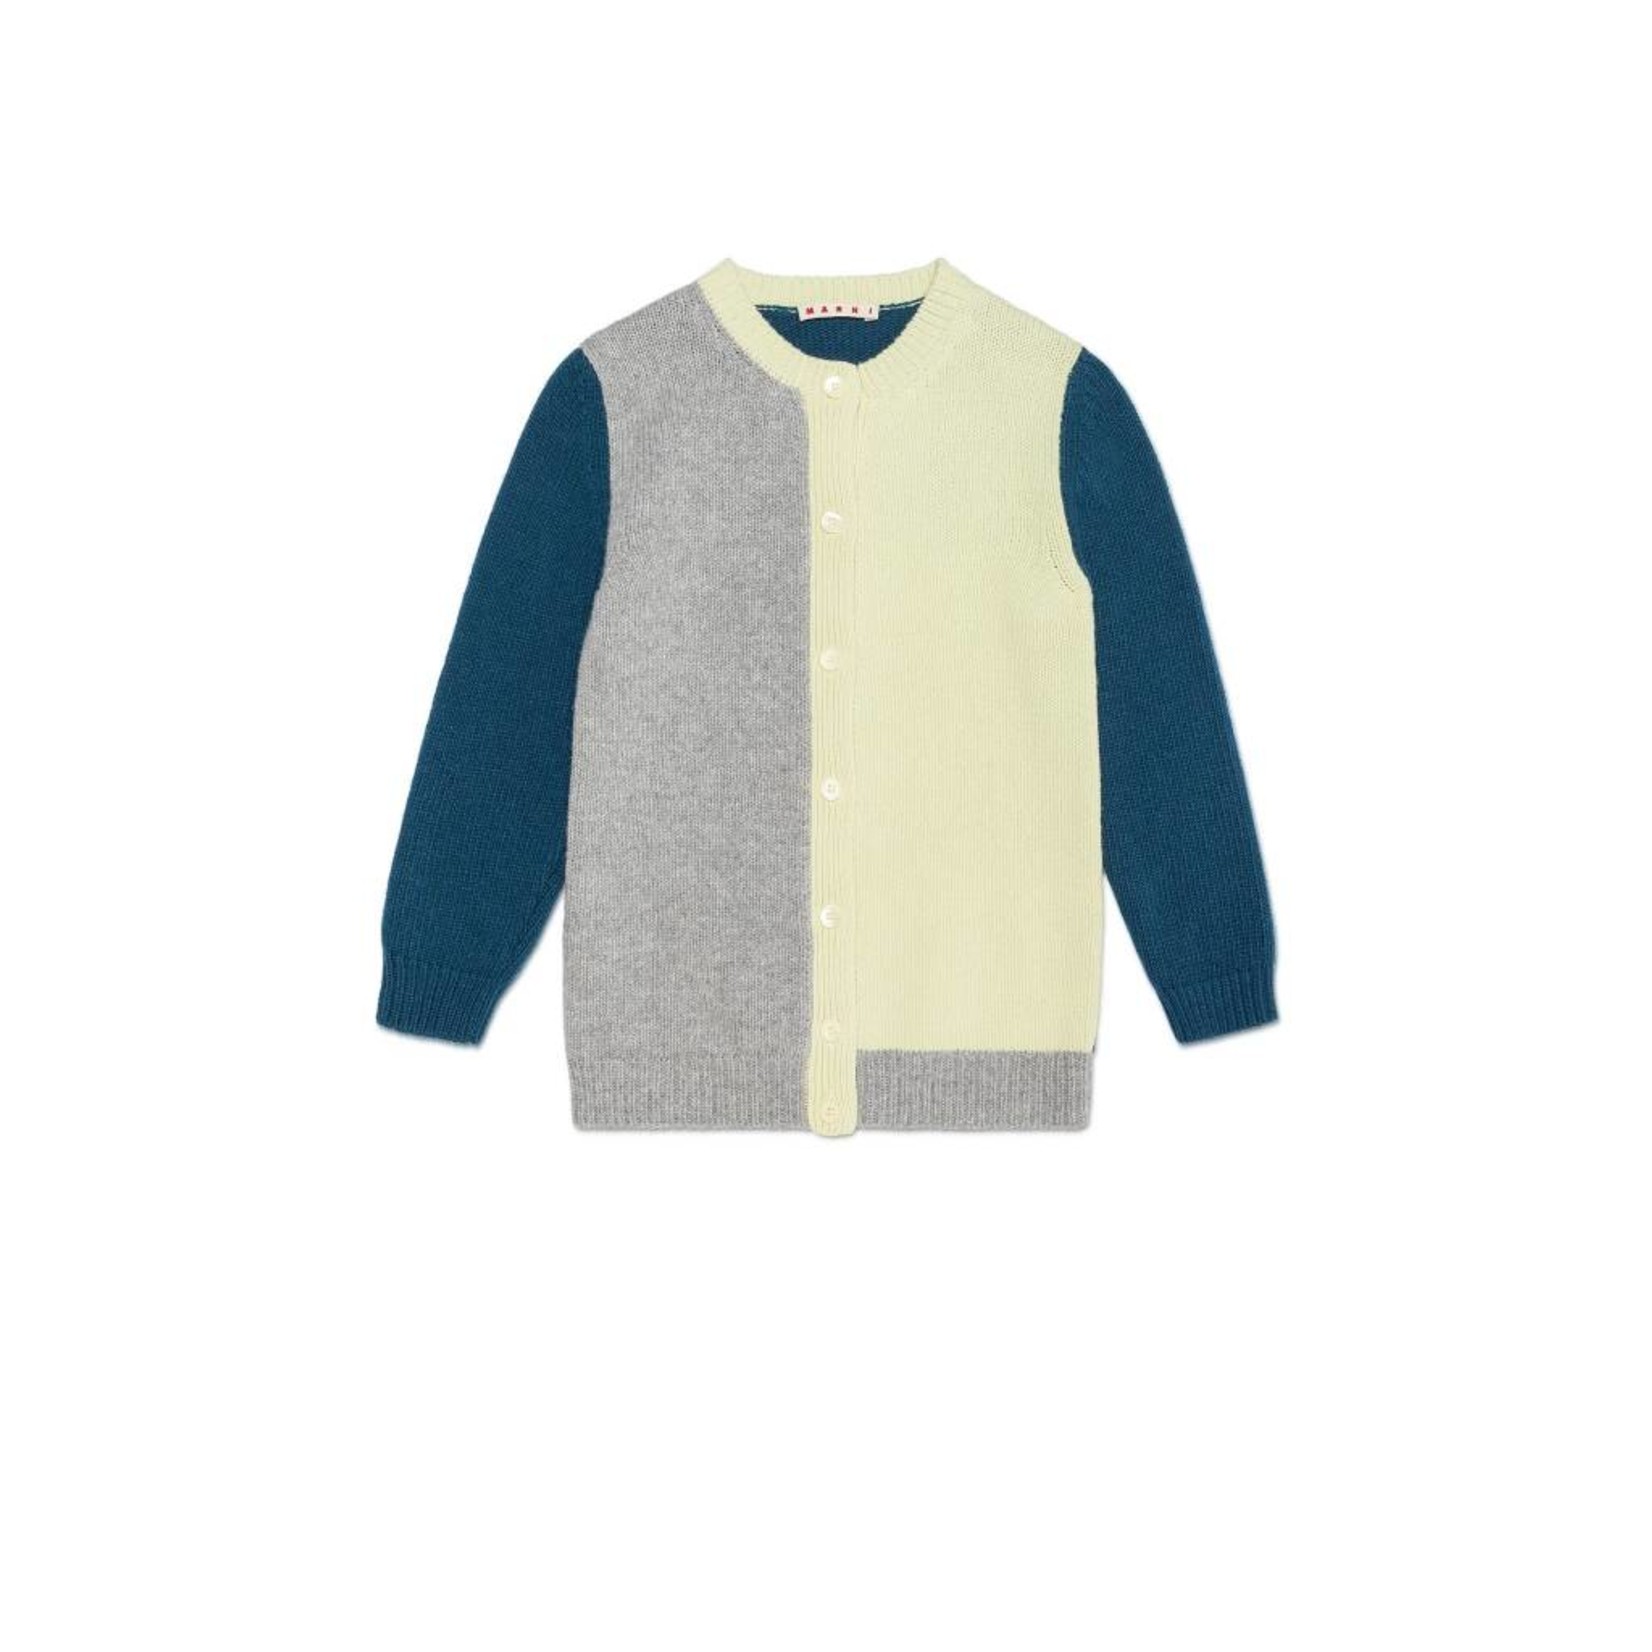 Marni Marni Girl Sweater